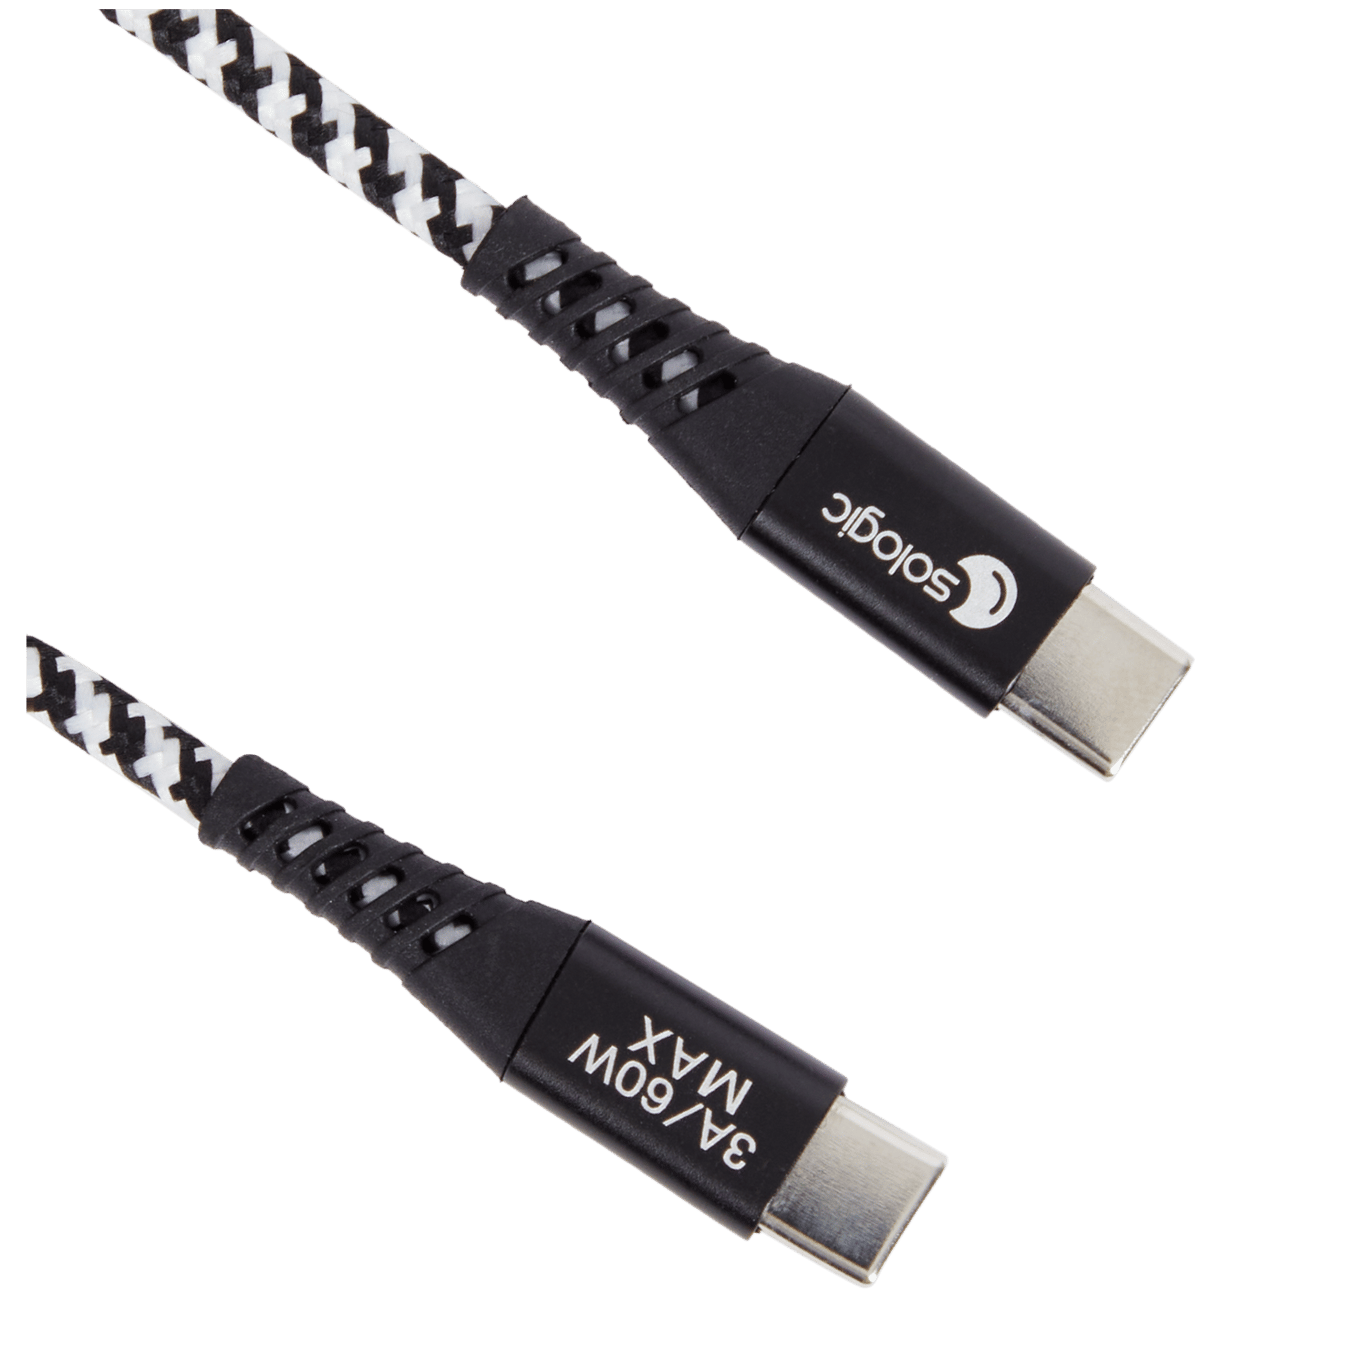 Sologic laad- en datakabel USB-C naar USB-C